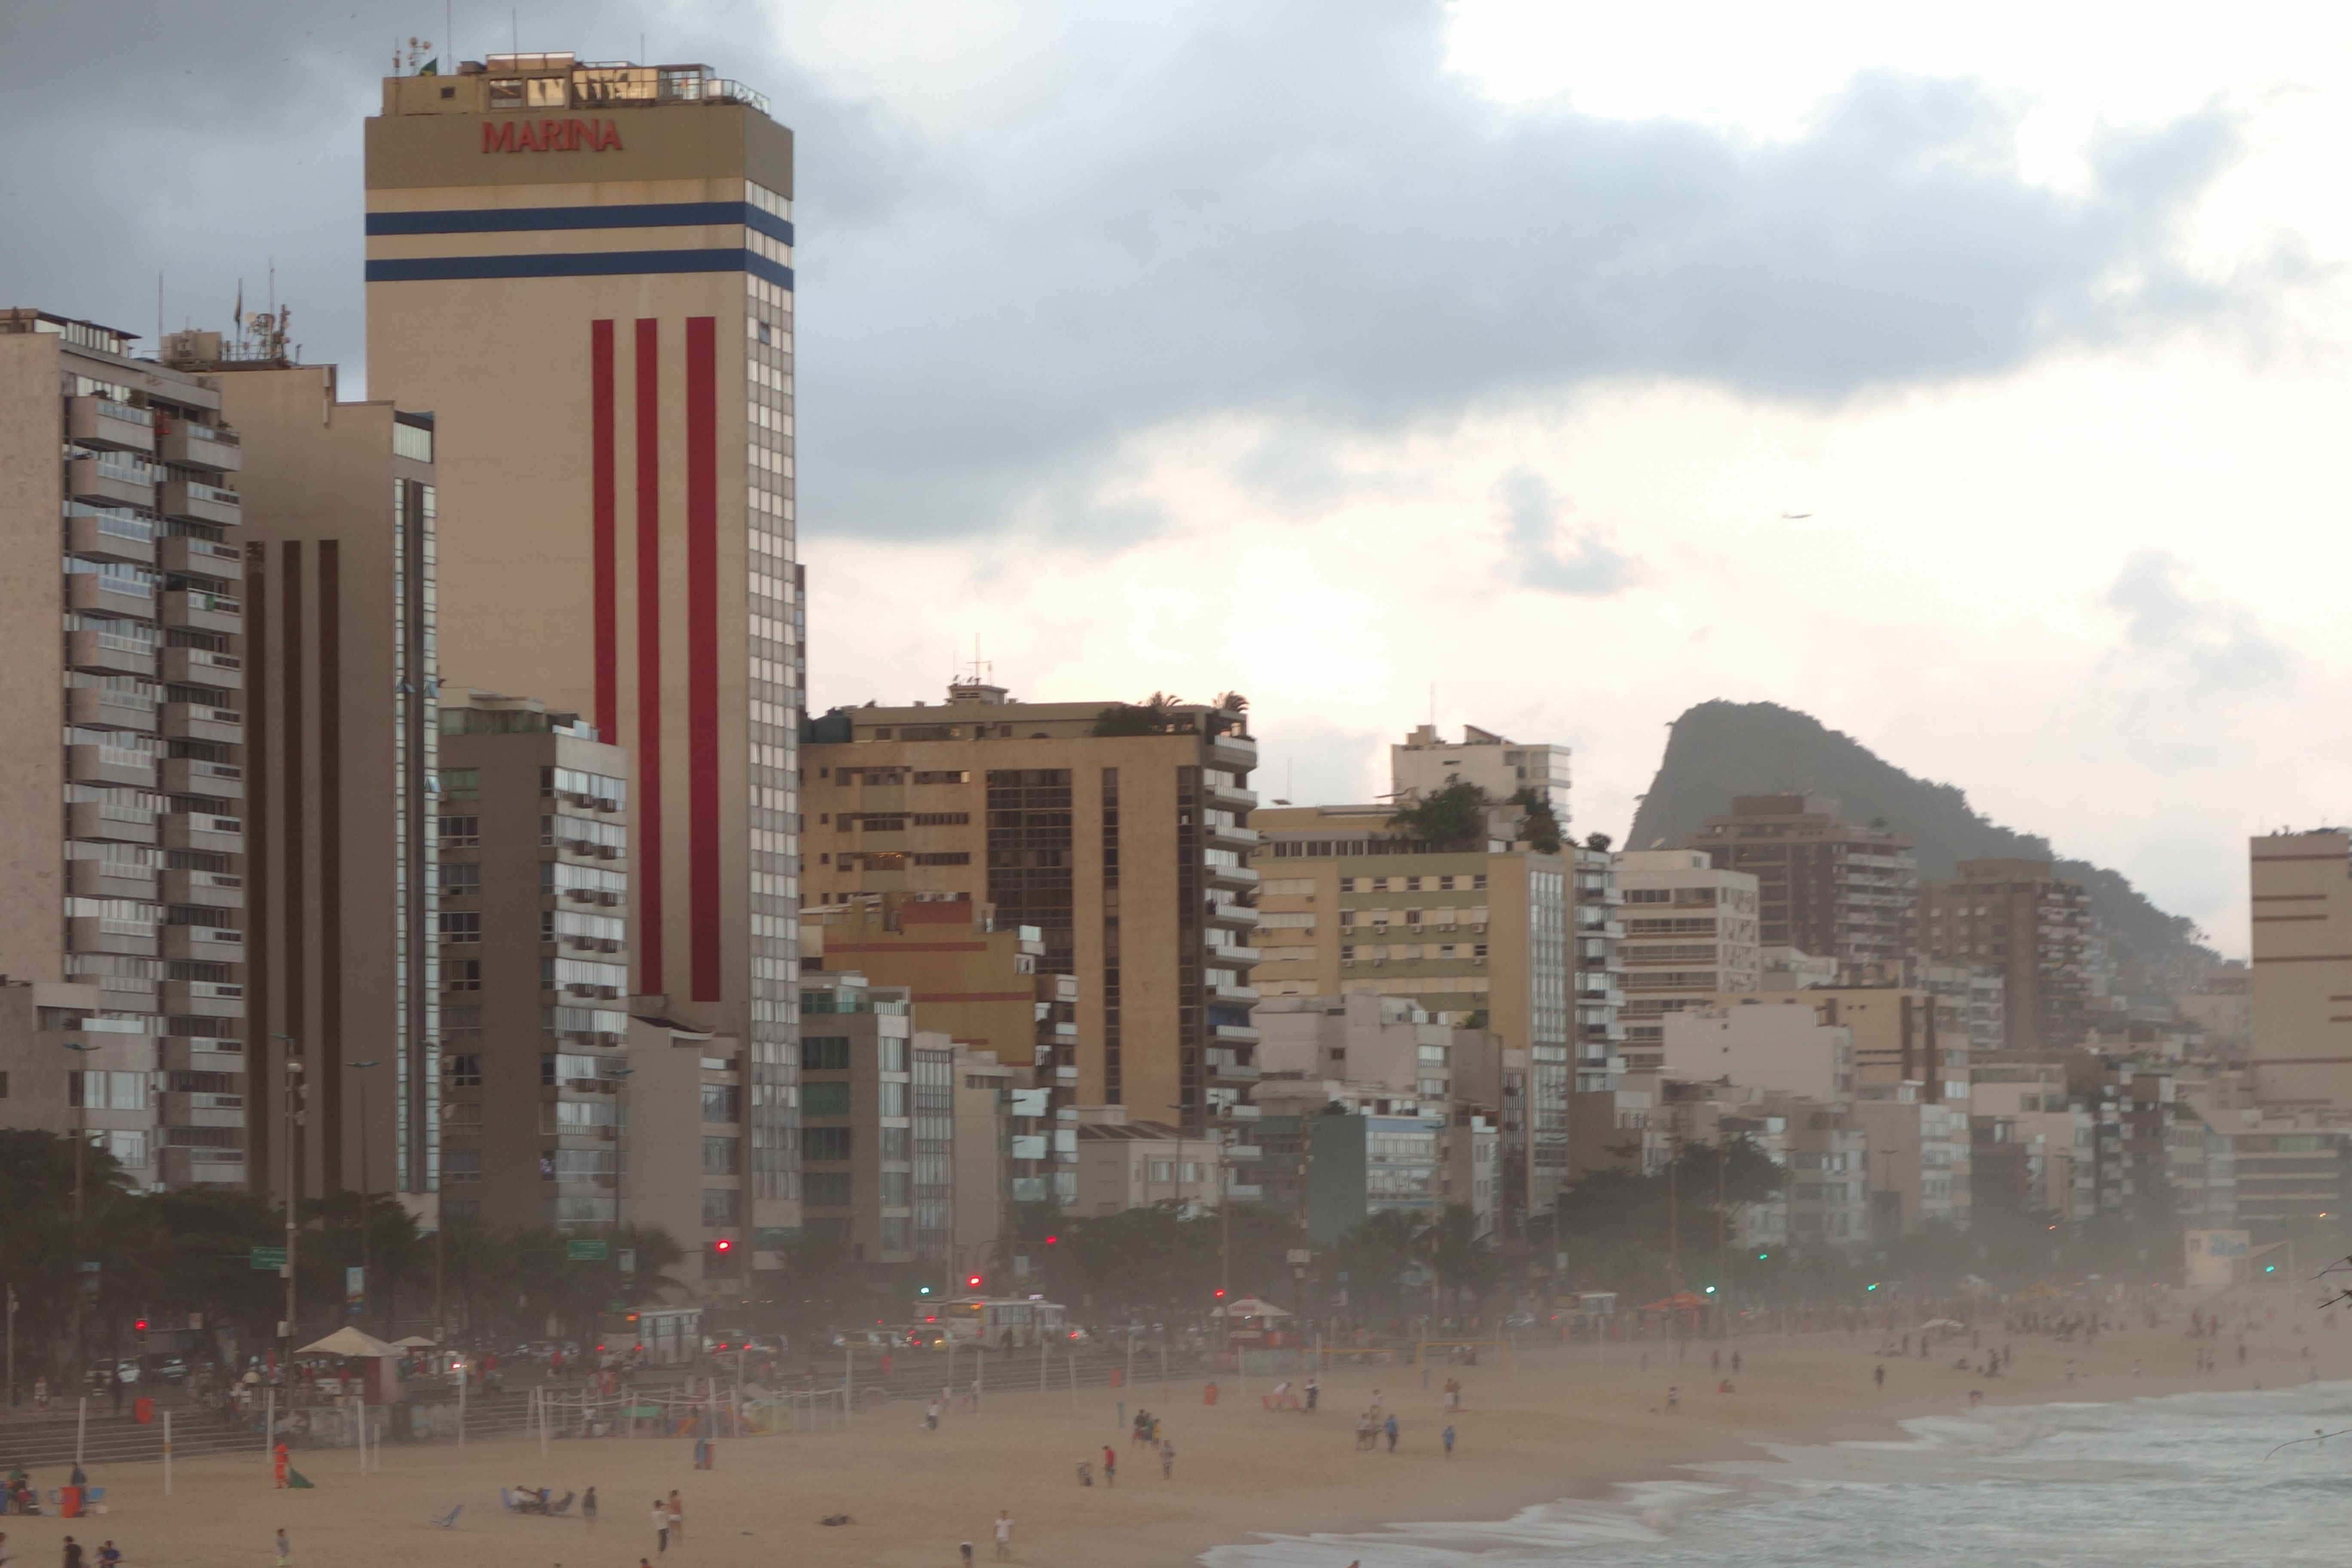 Plage de Rio de Janeiro photo blog voyage tour du monde travel https://yoytourdumonde.fr